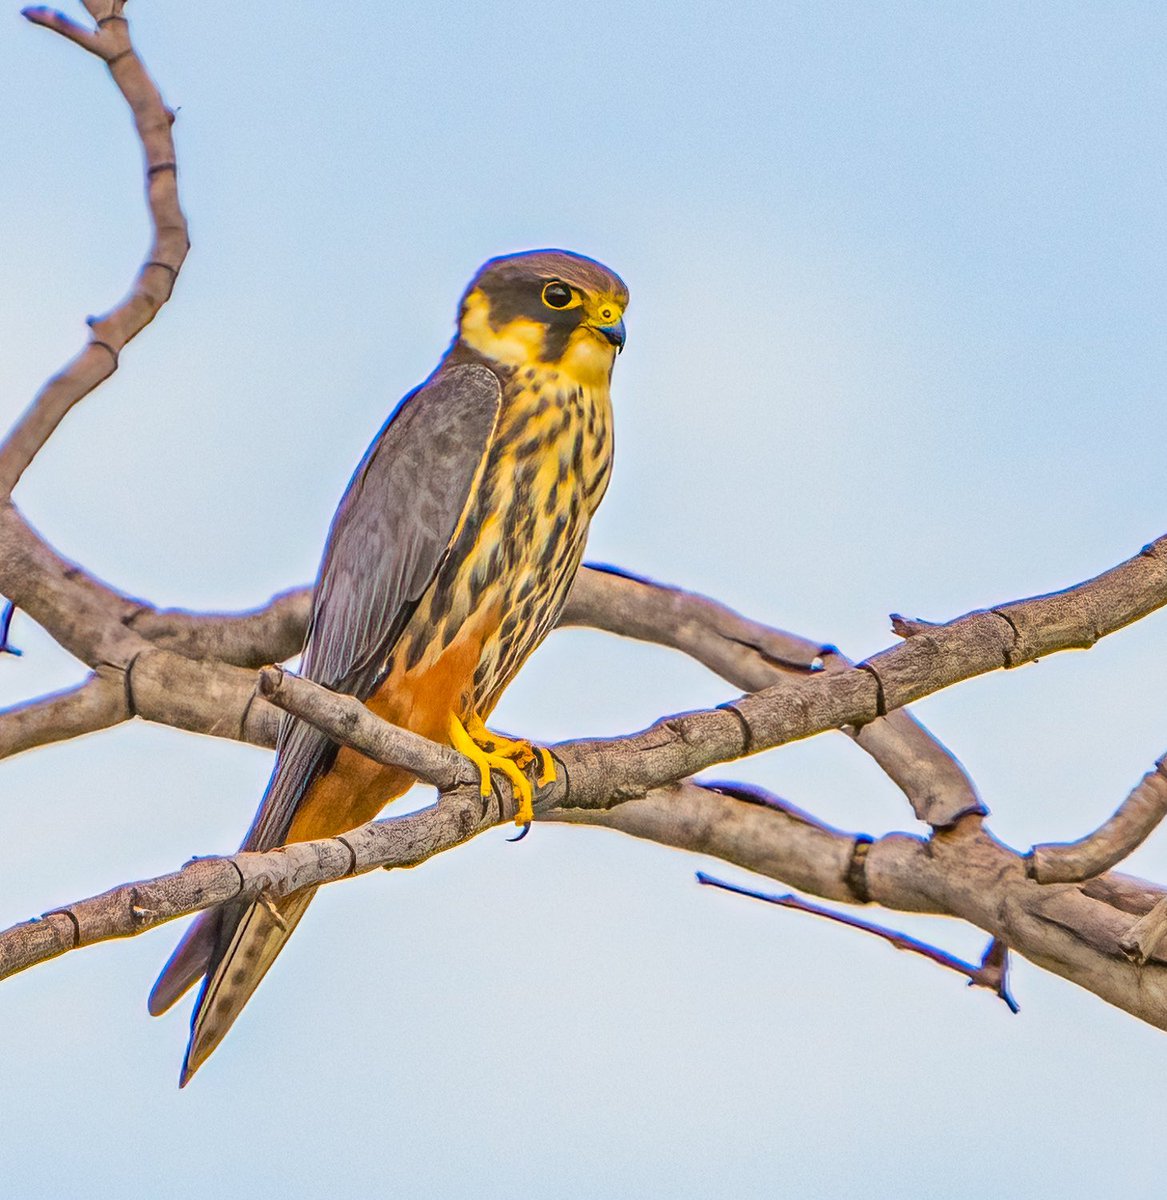 Amur Falcons aplenty in Victoria Falls National Park last month @Natures_Voice @NatGeoTravel #BBCWildlifePOTD #NaturePhotography #wildlifephotography #birding #afrcanwildlifephotography #raptors #victoriafalls